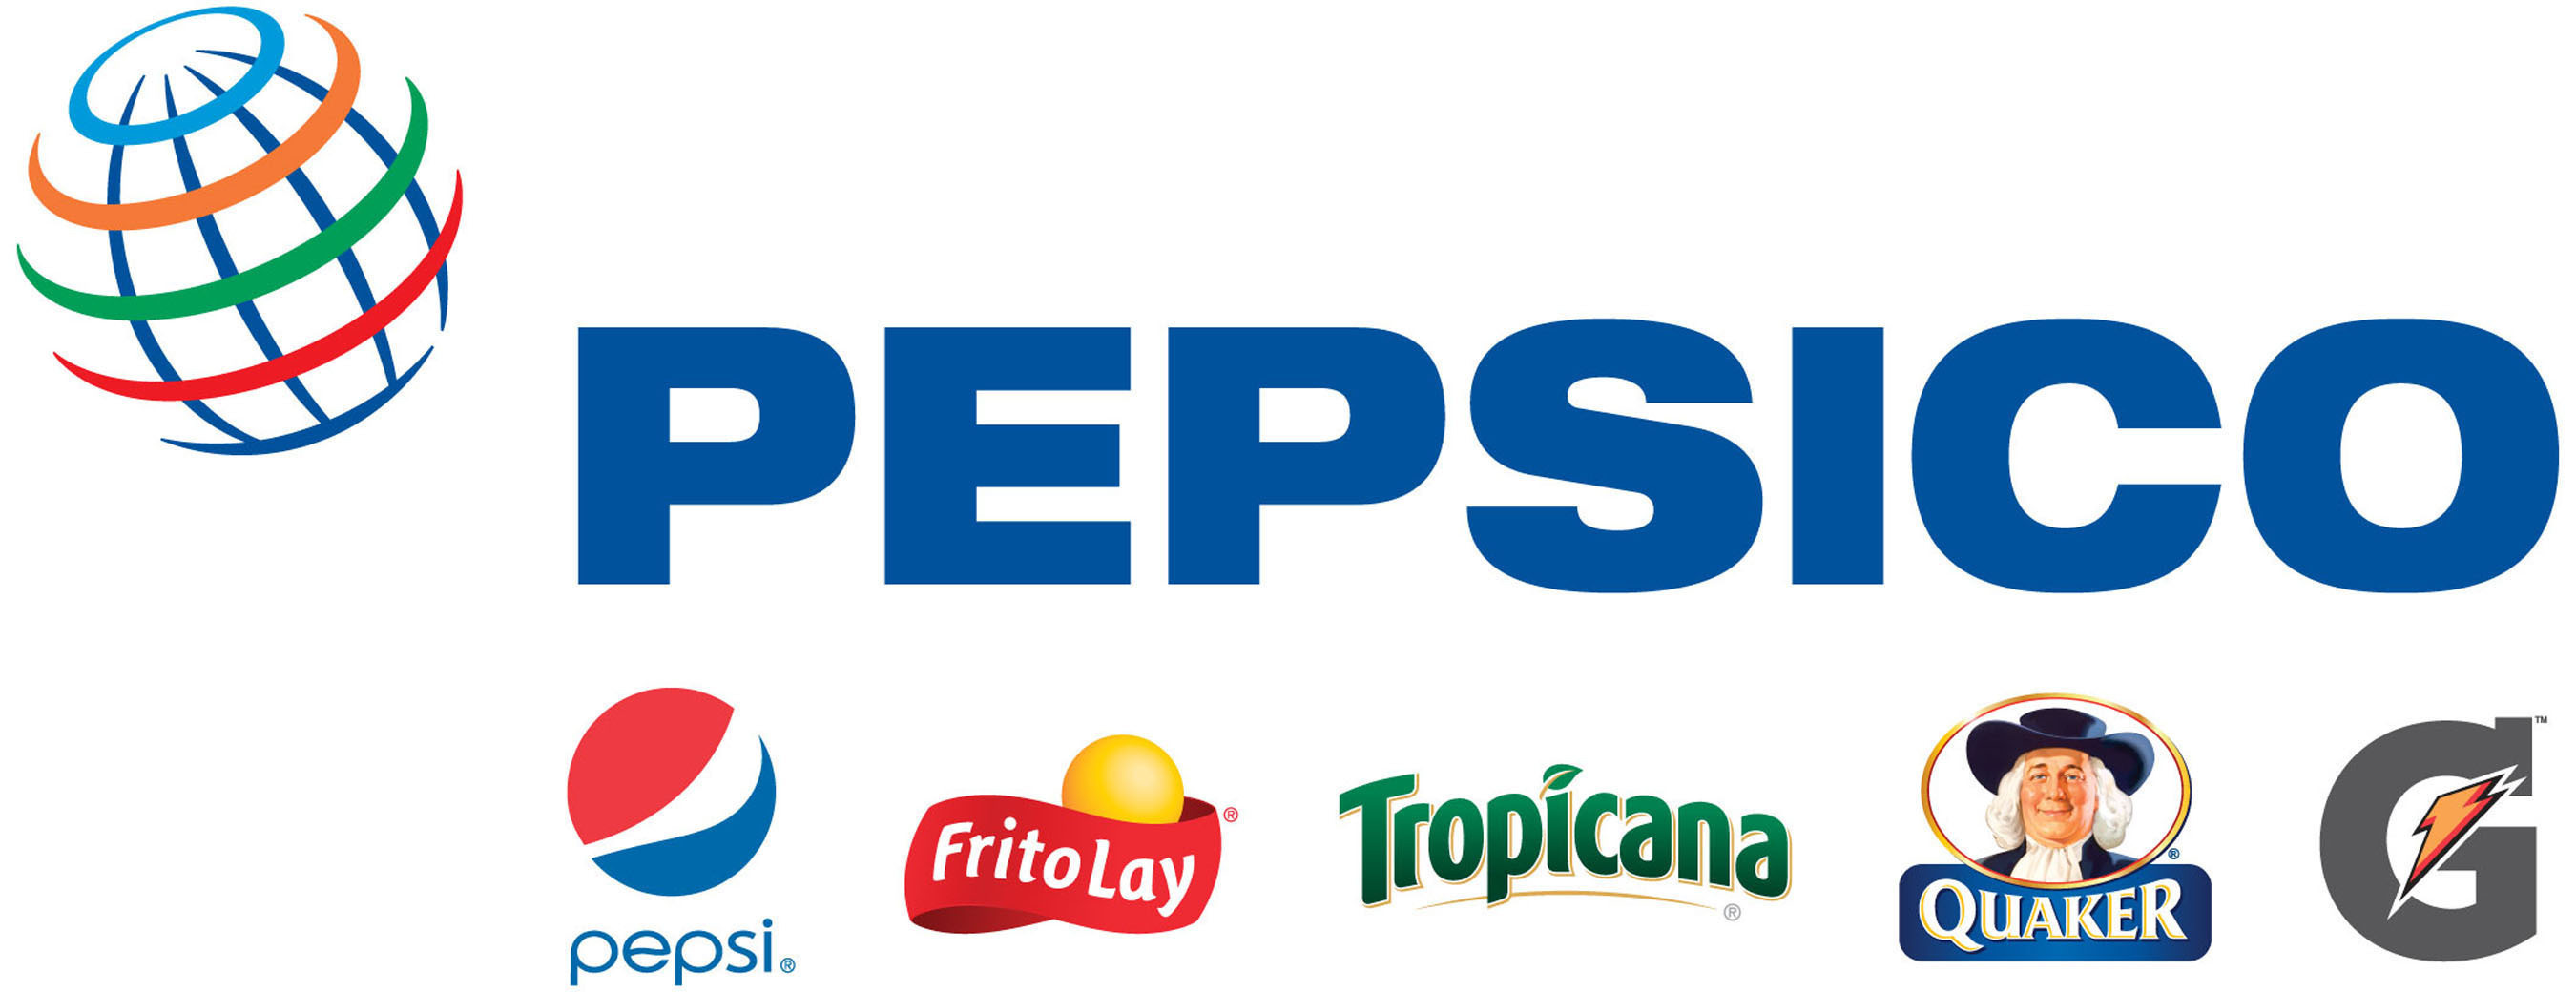 Pepsico logo Wallpaper